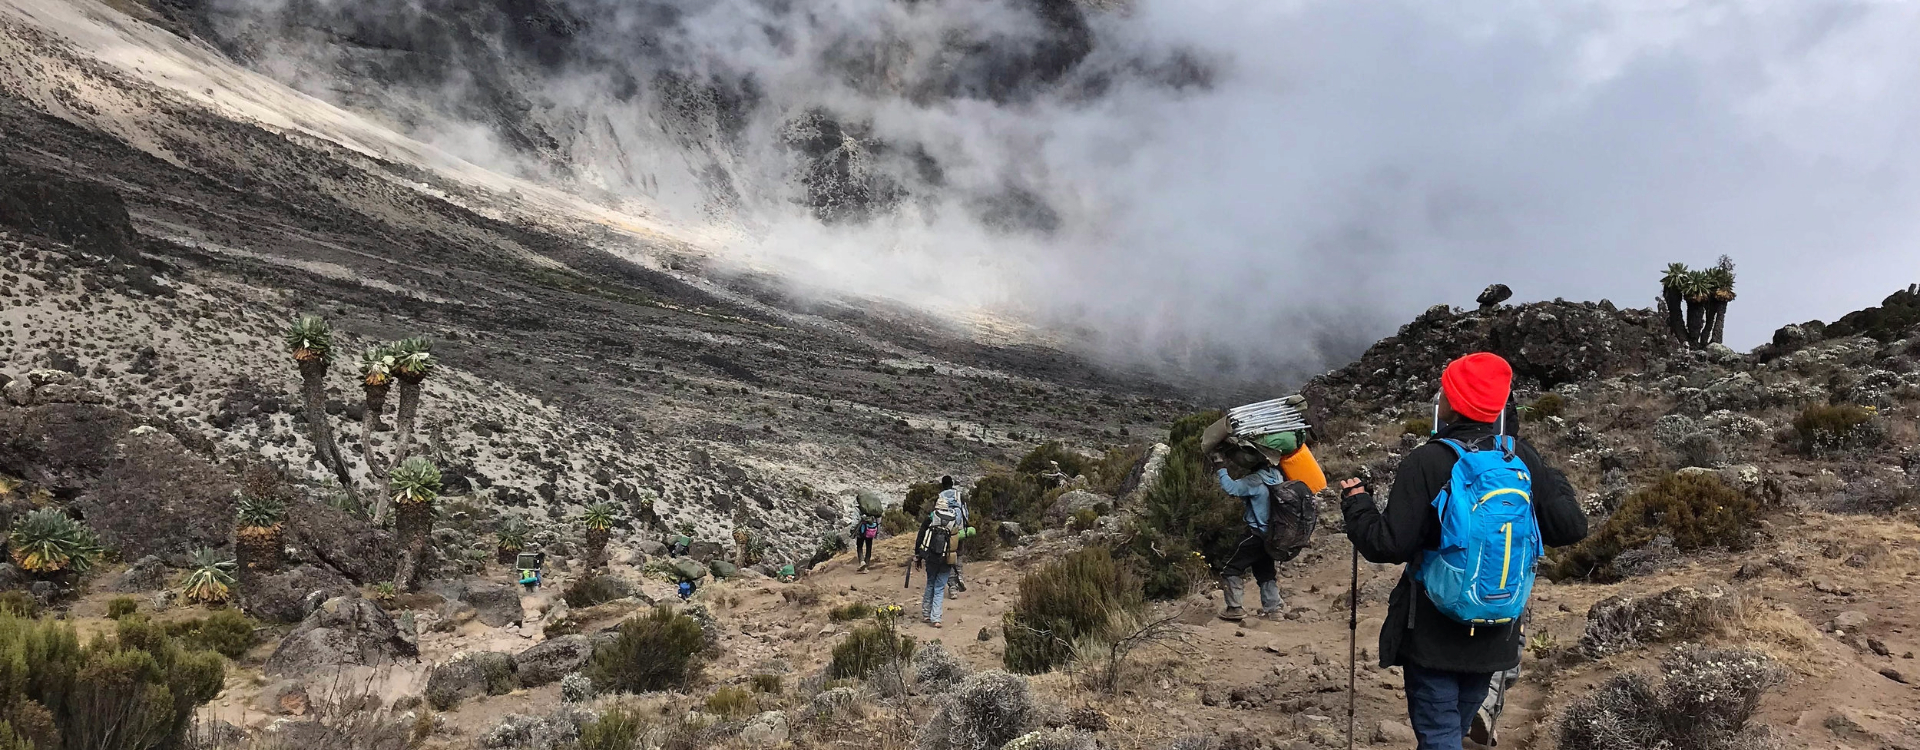 Altitude Training For Kilimanjaro